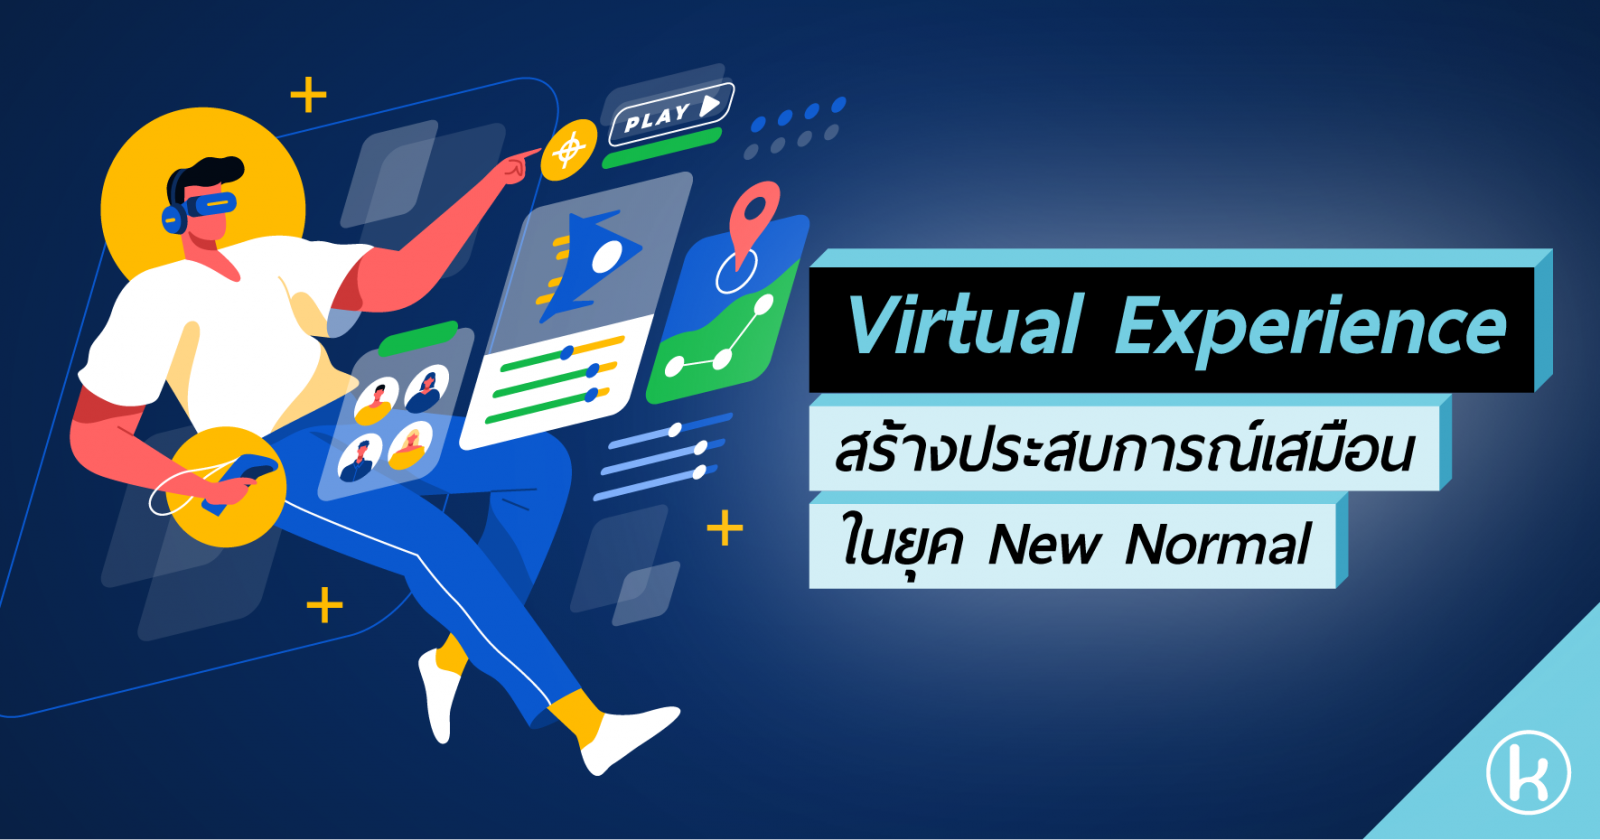 “Virtual Experience” สร้างประสบการณ์เสมือนในยุค New Normal